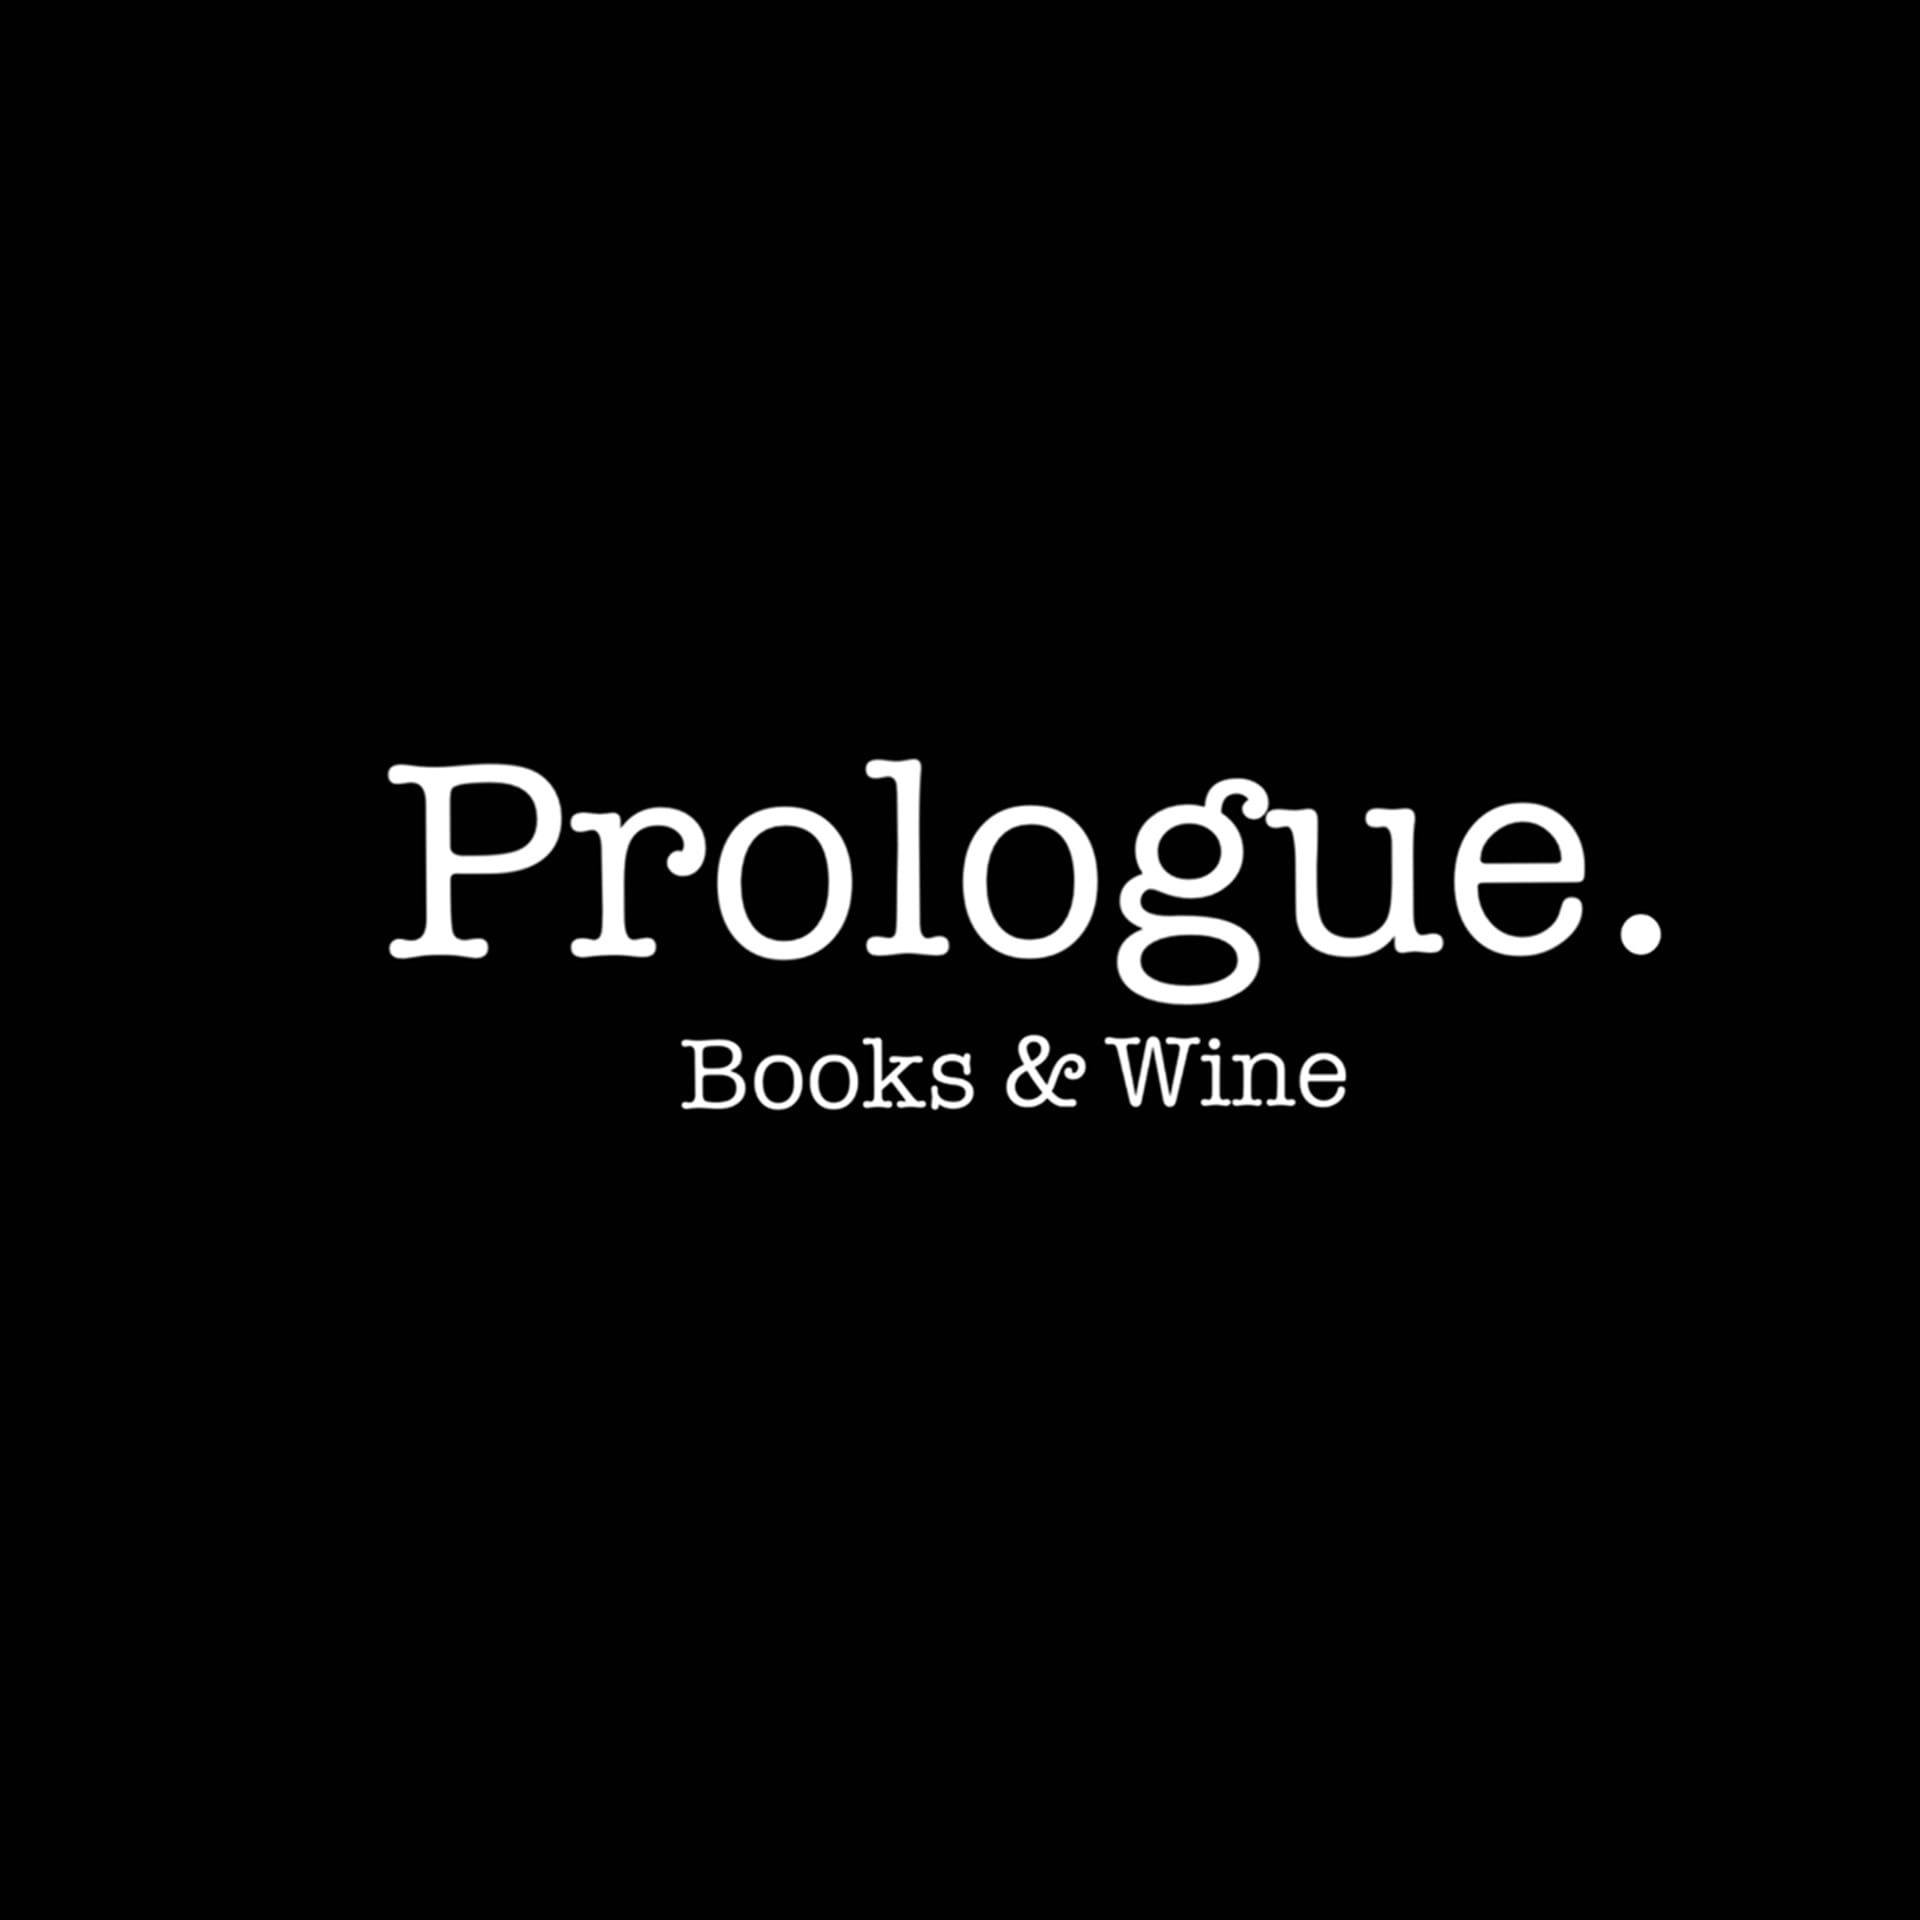 Prologue Books & Wine Charles City